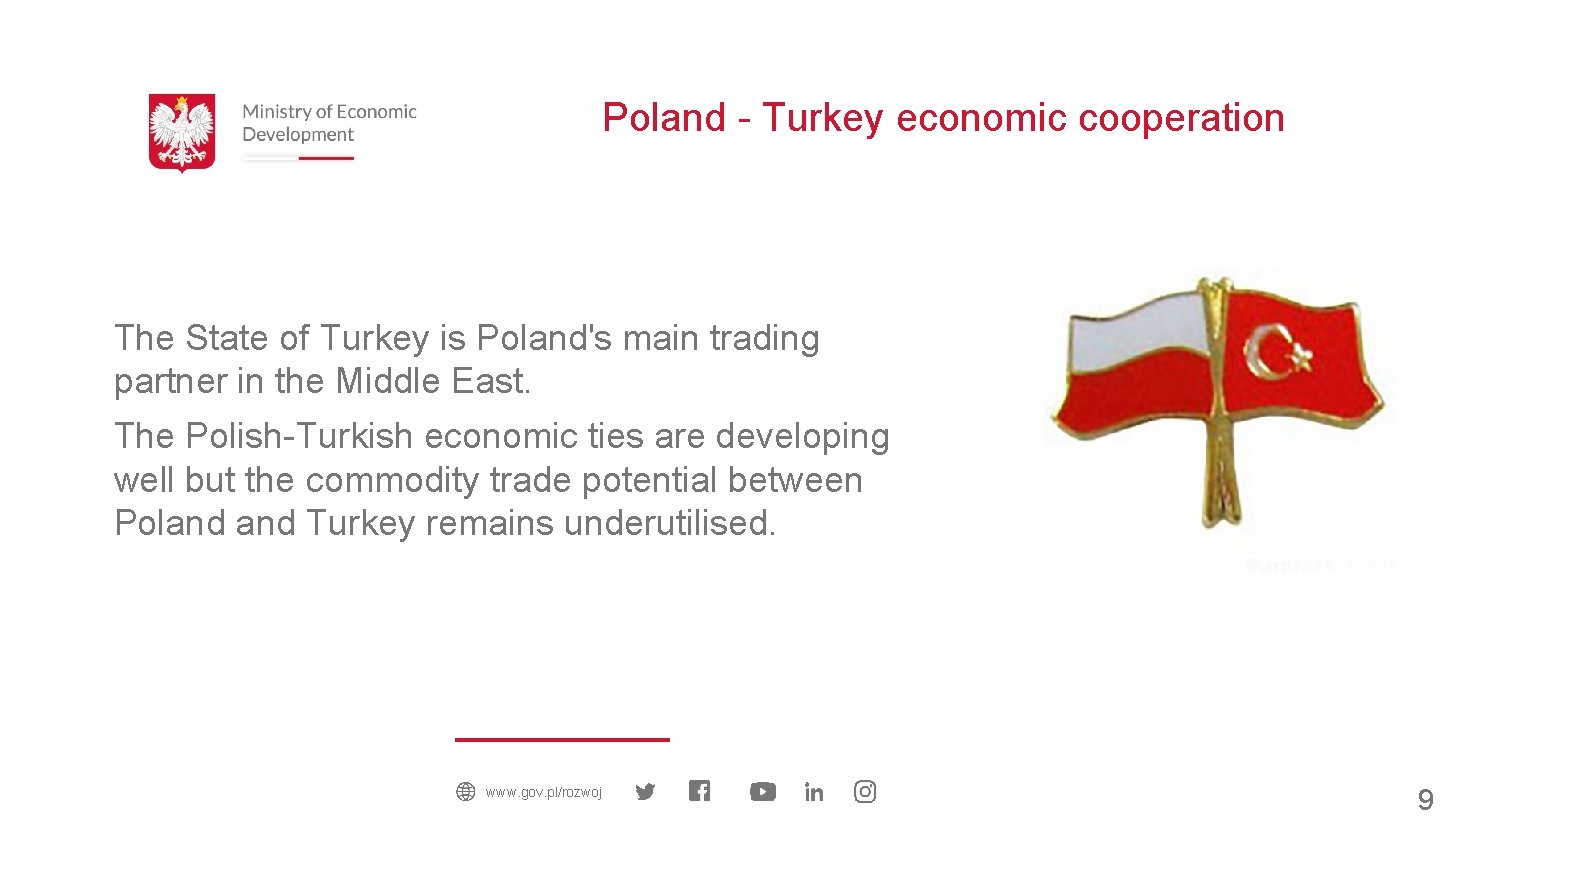 Poland - Turkey economic cooperation The State of Turkey is Poland's main trading partner